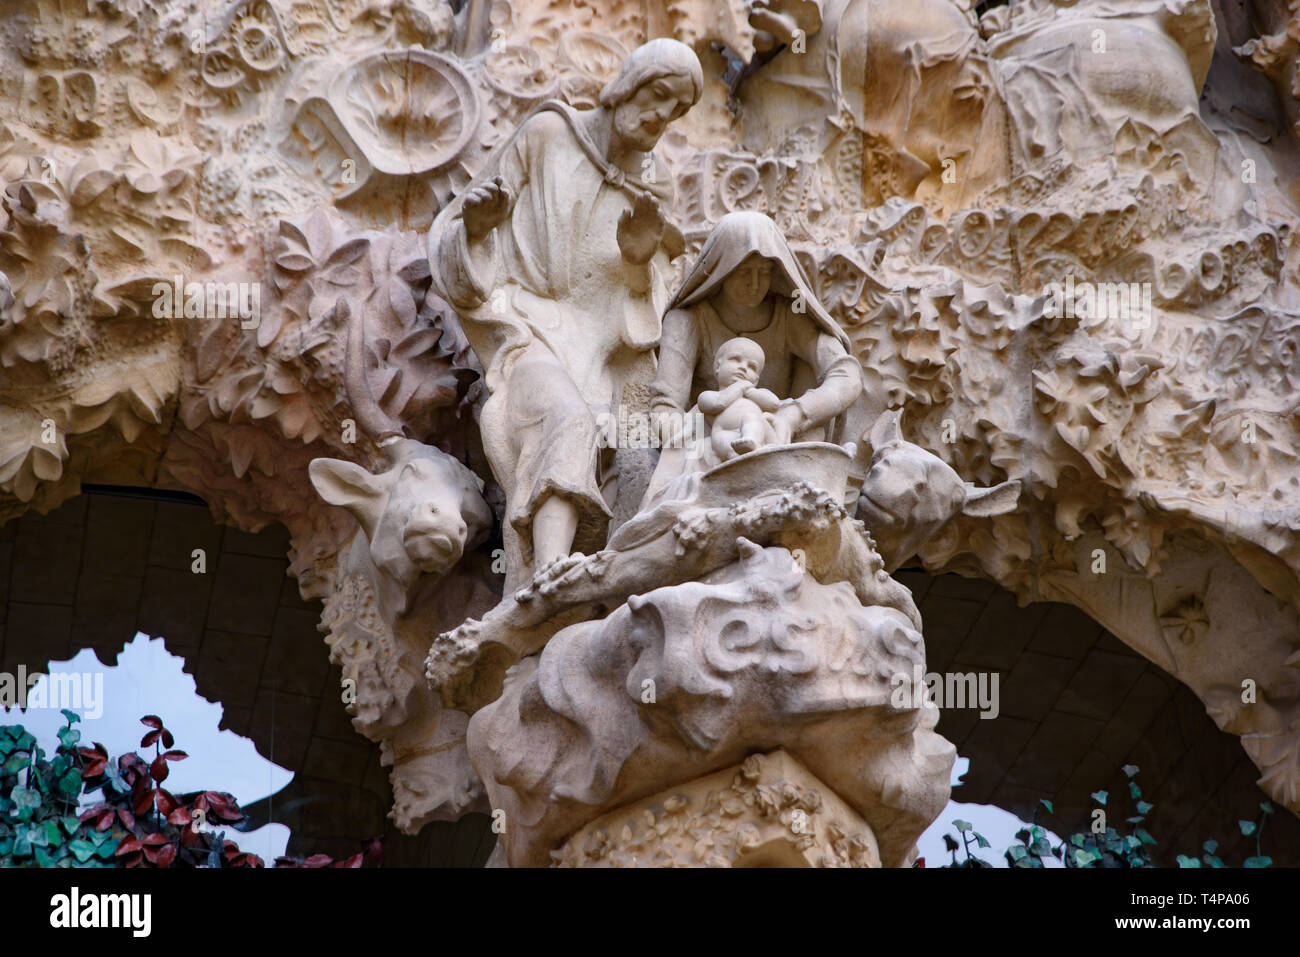 Artworks de la Façade de la Nativité de la Sagrada Familia à Barcelone, Espagne Banque D'Images